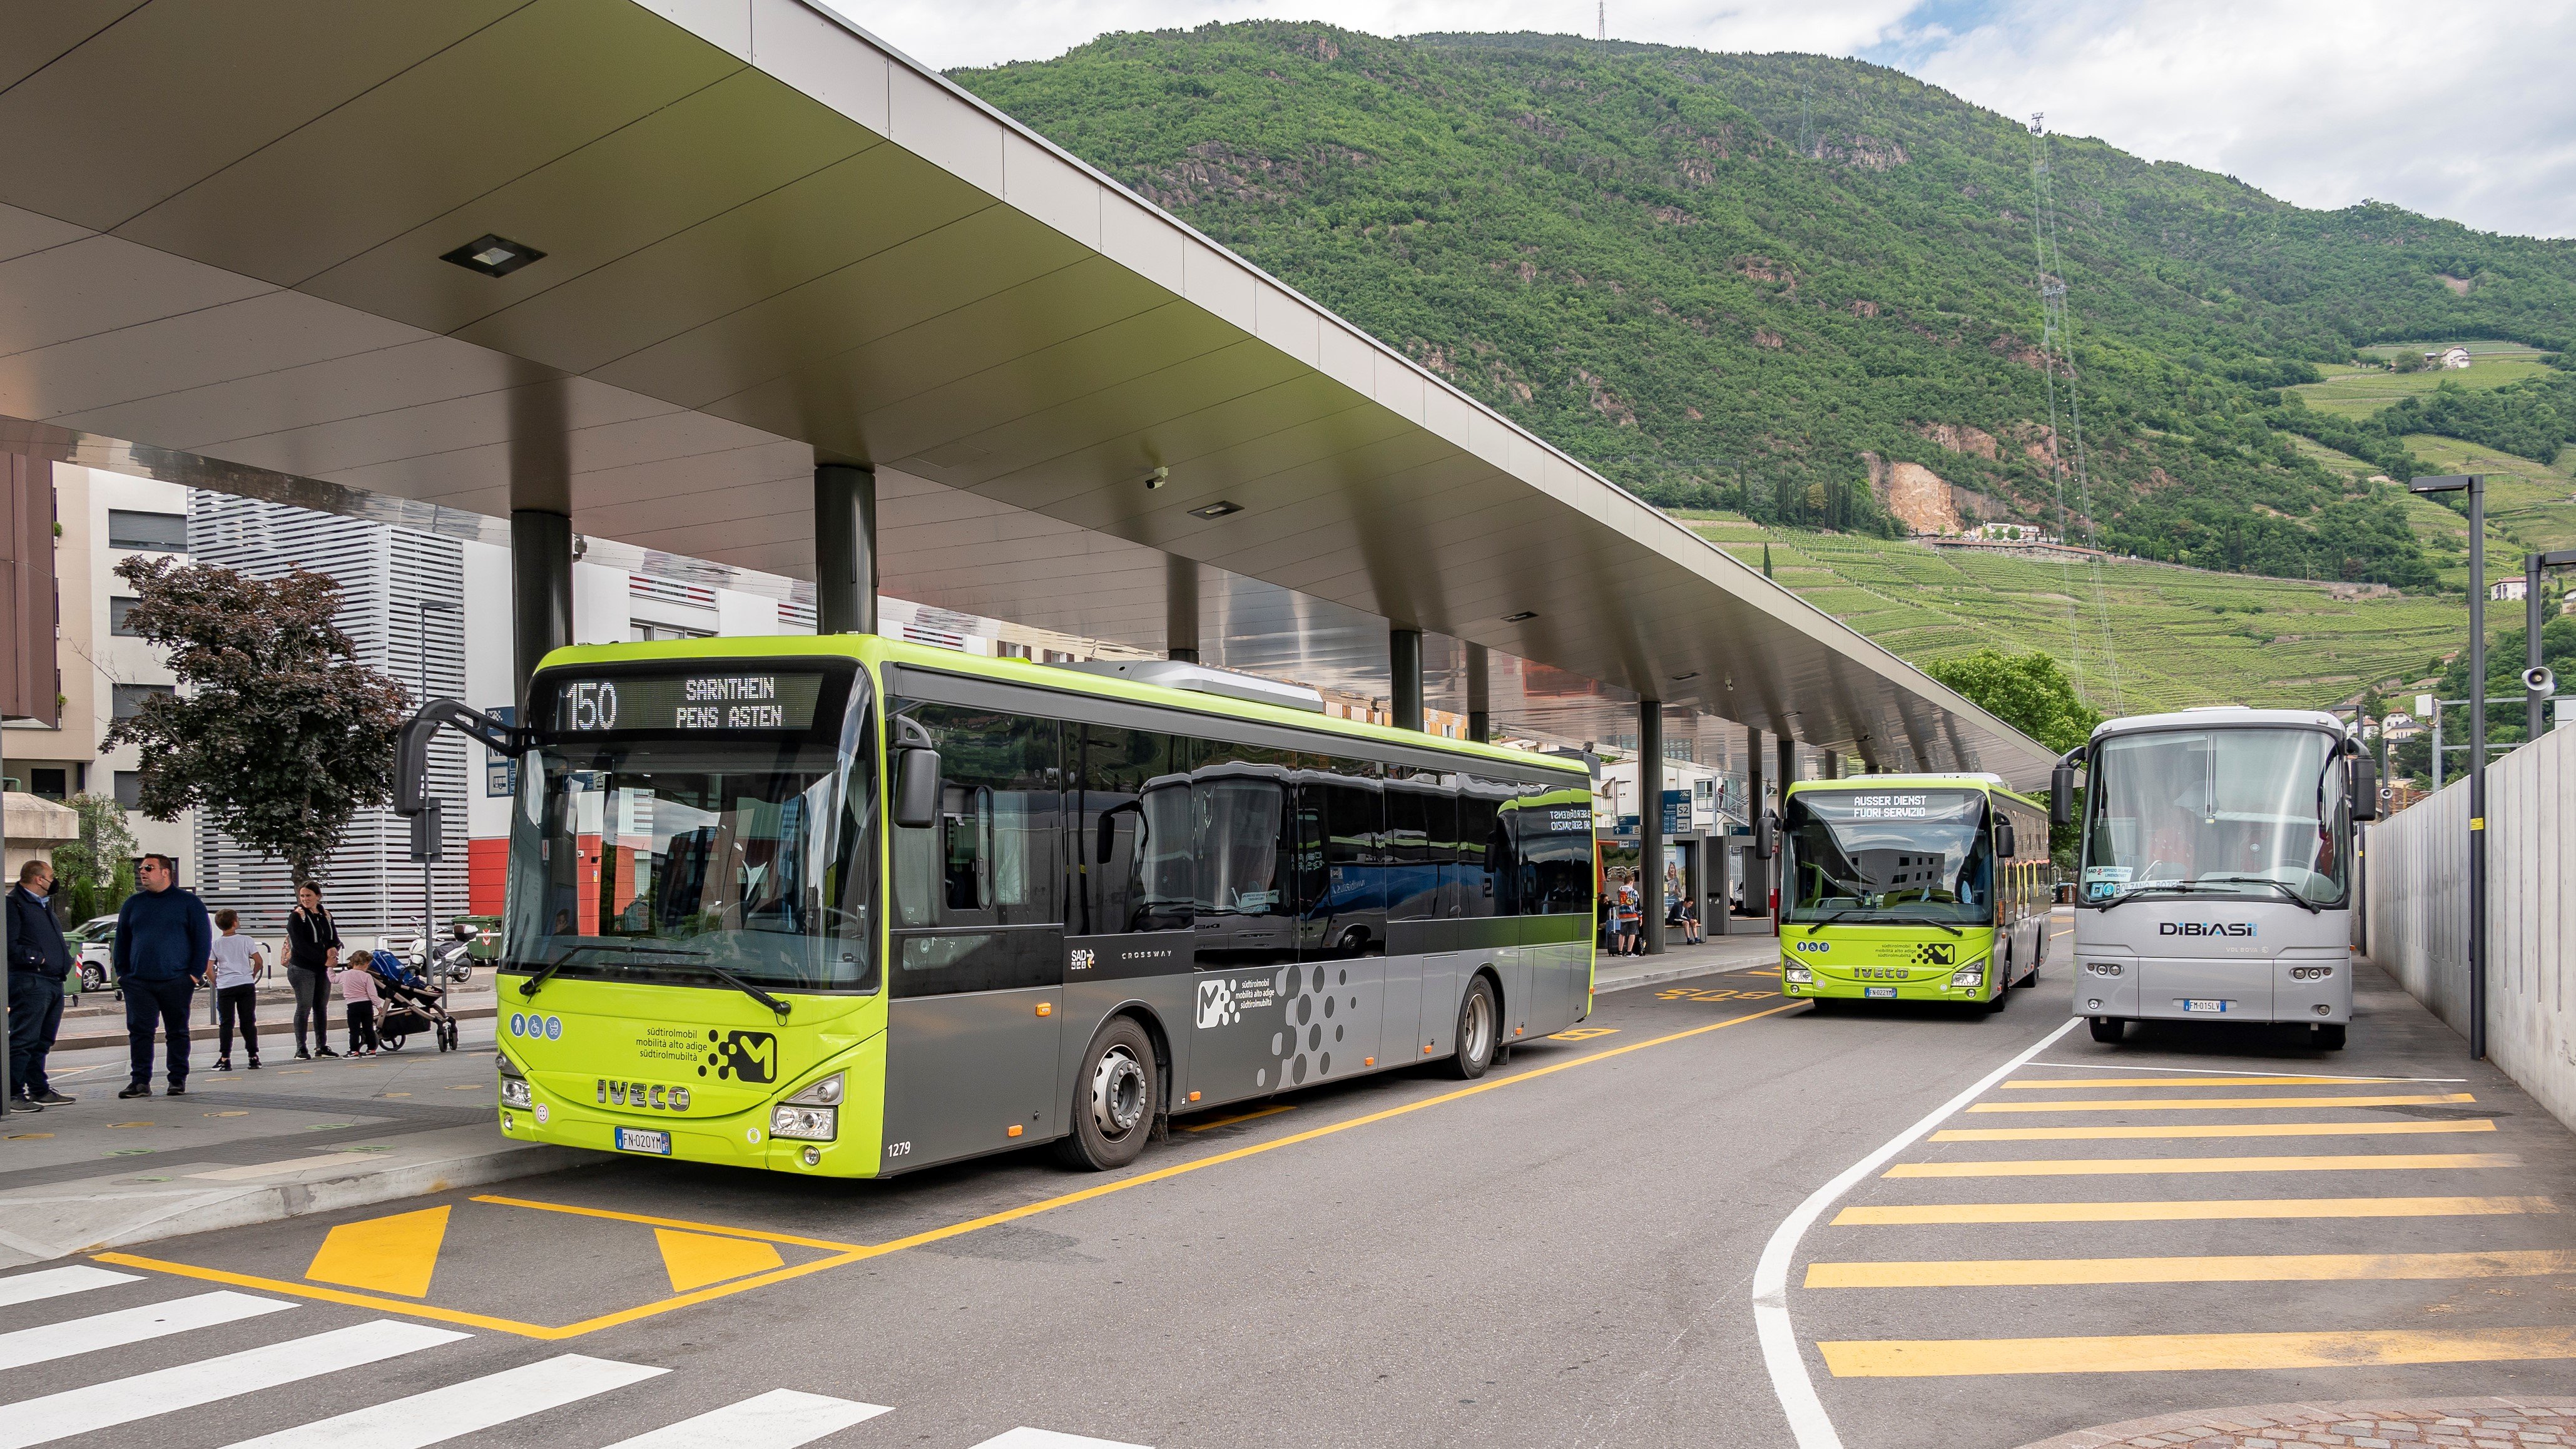 The bus station in Bolzano/Bozen